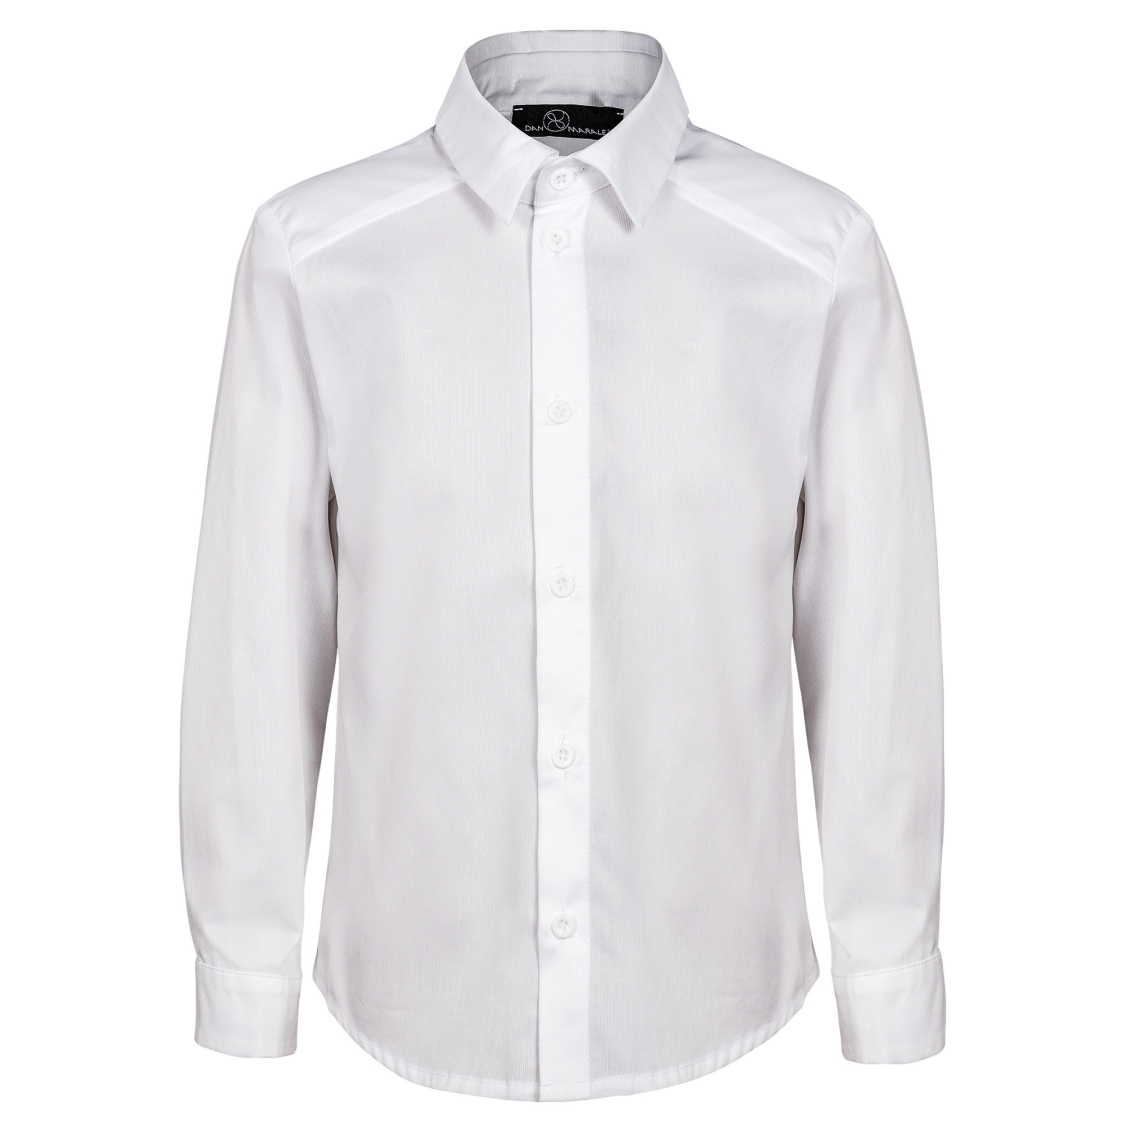 Stockmann 1862 рубашка мужская белая